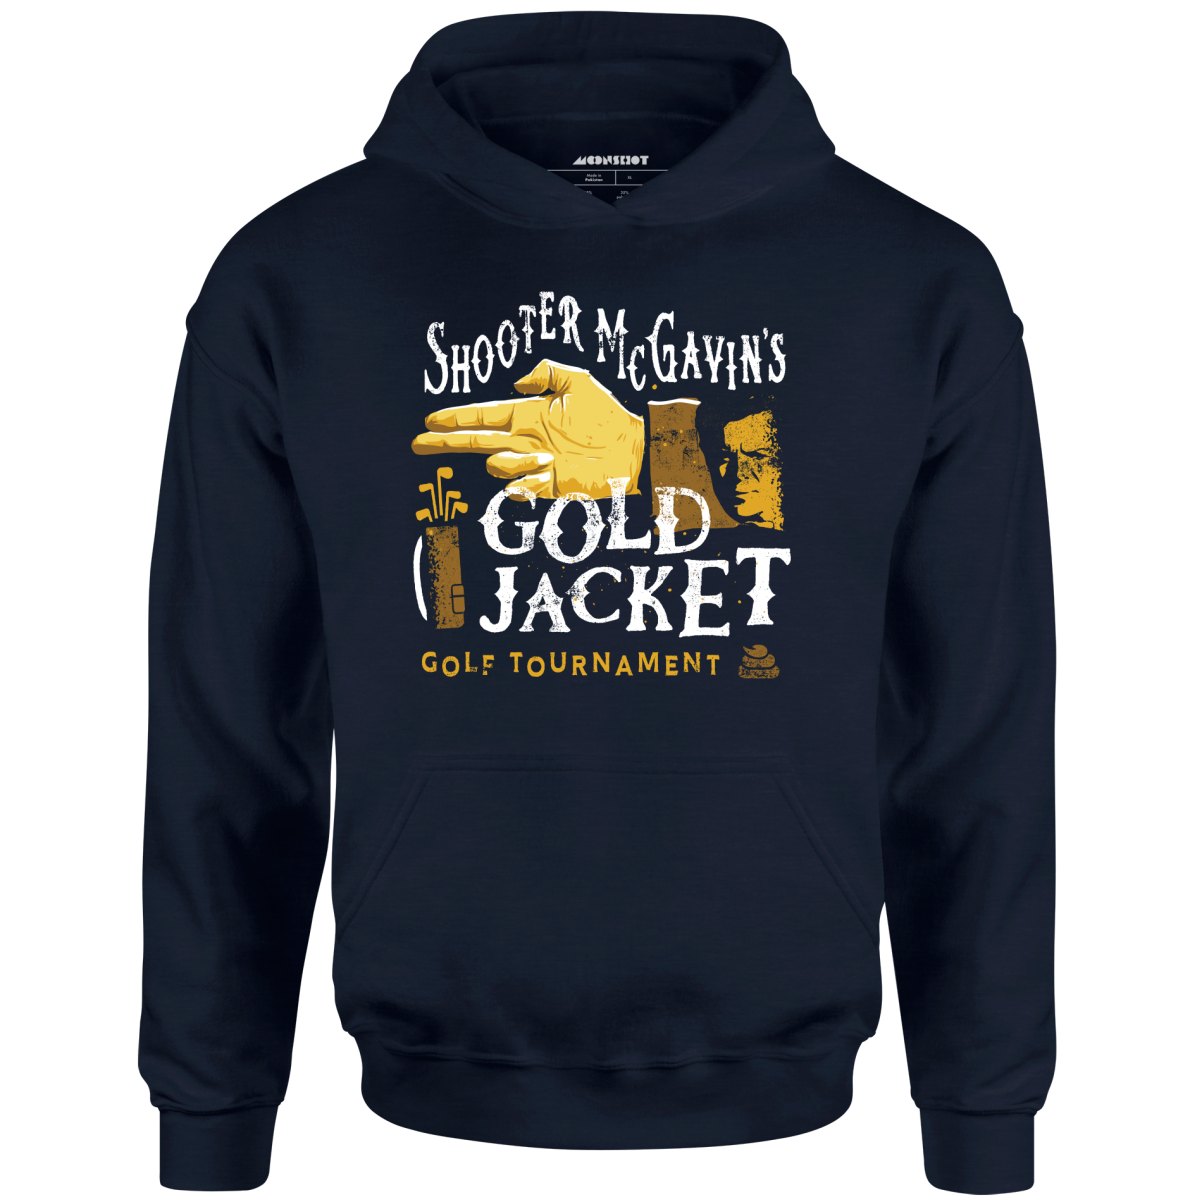 Shooter McGavin's Gold Jacket Golf Tournament - Unisex Hoodie